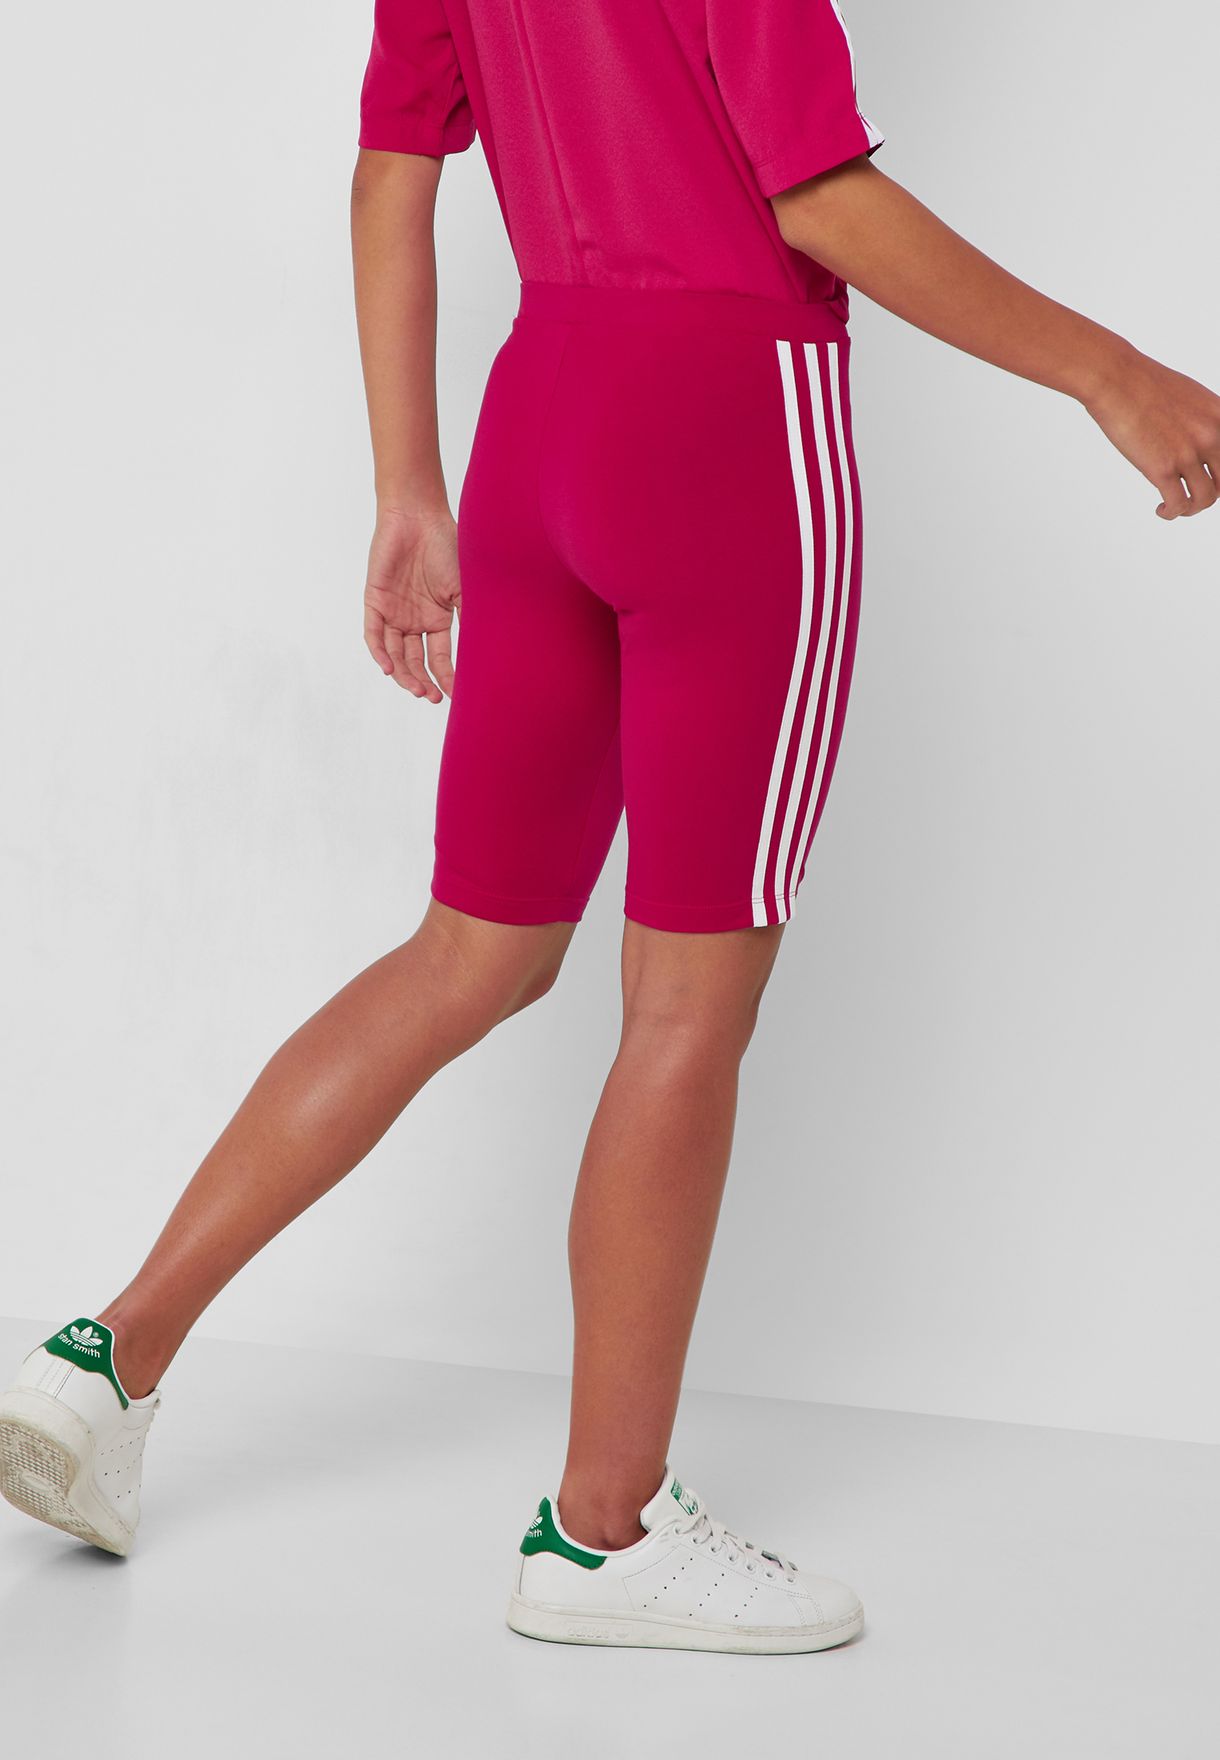 Buy adidas Originals pink Sleek 3 